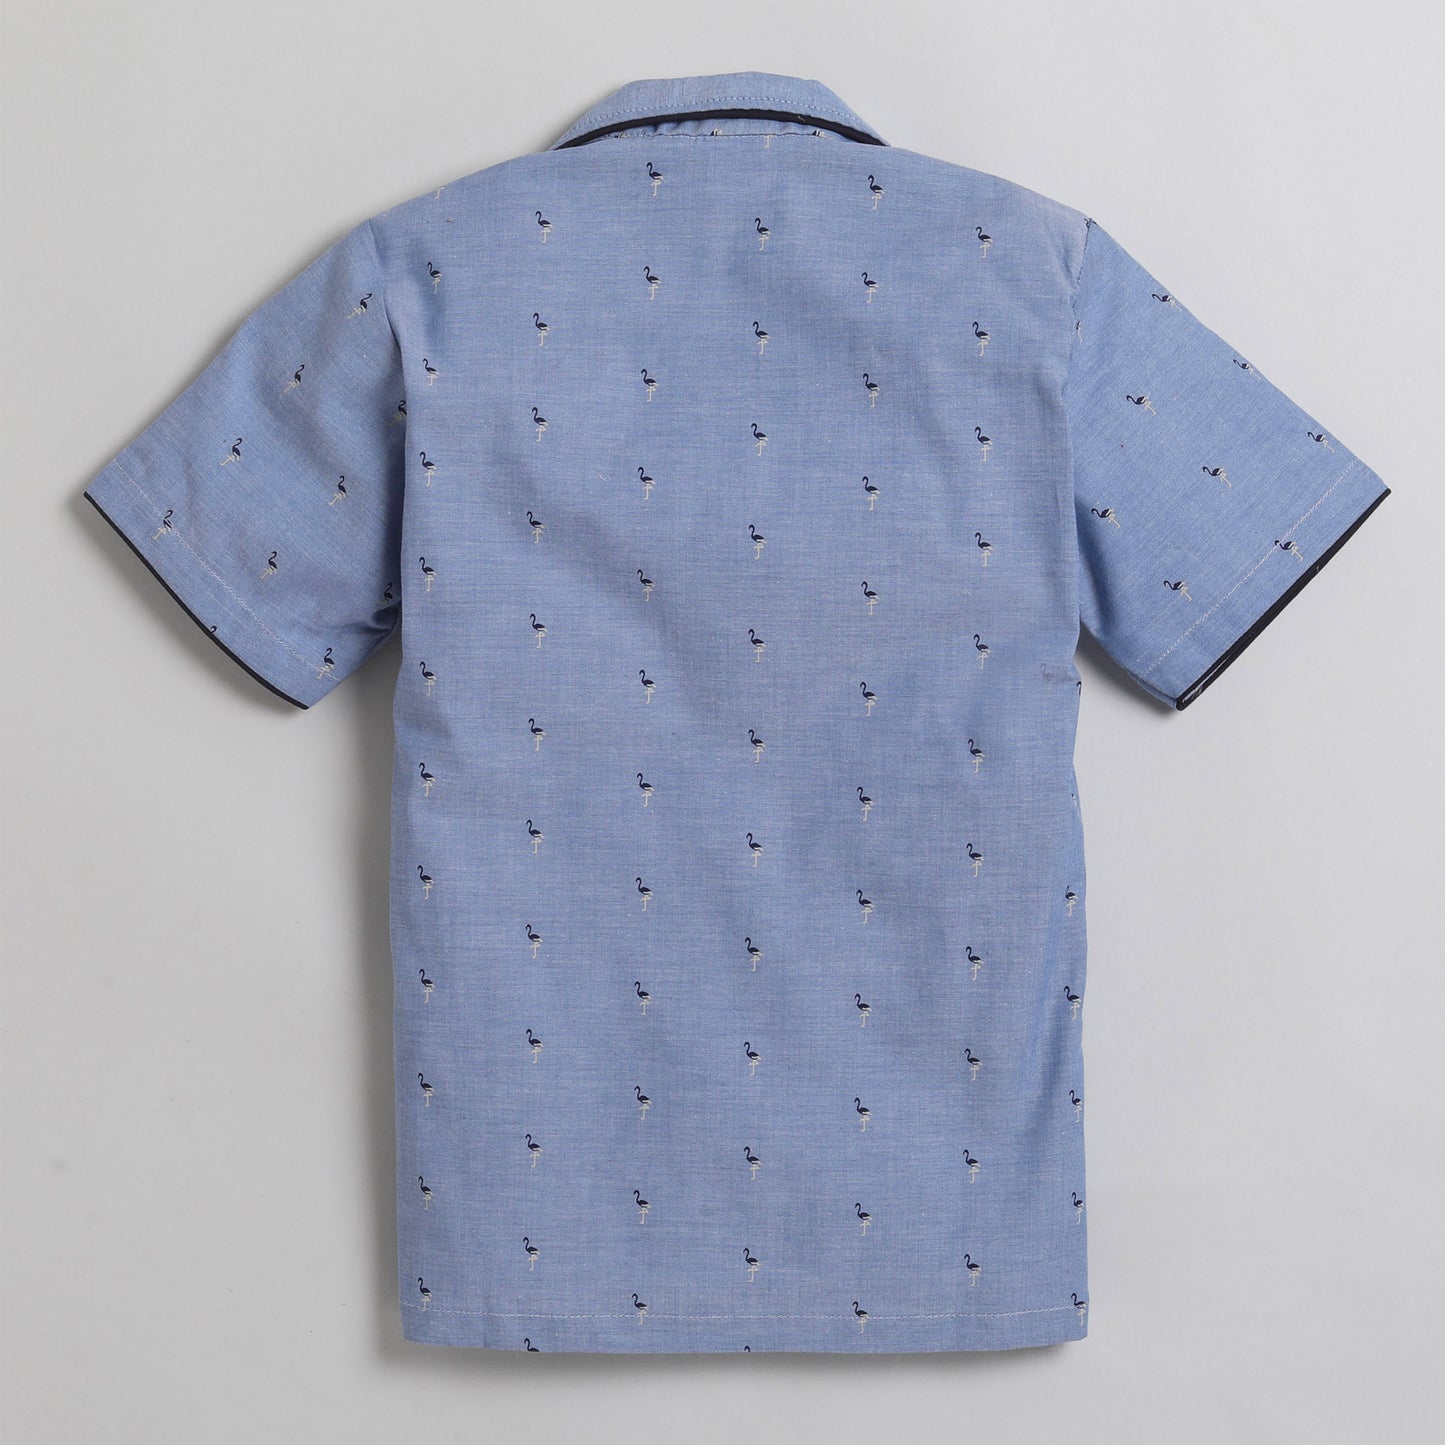 Polka Tots Half Sleeve Night Suit Pair 100% Cotton Flamingo Print   - Navy Blue